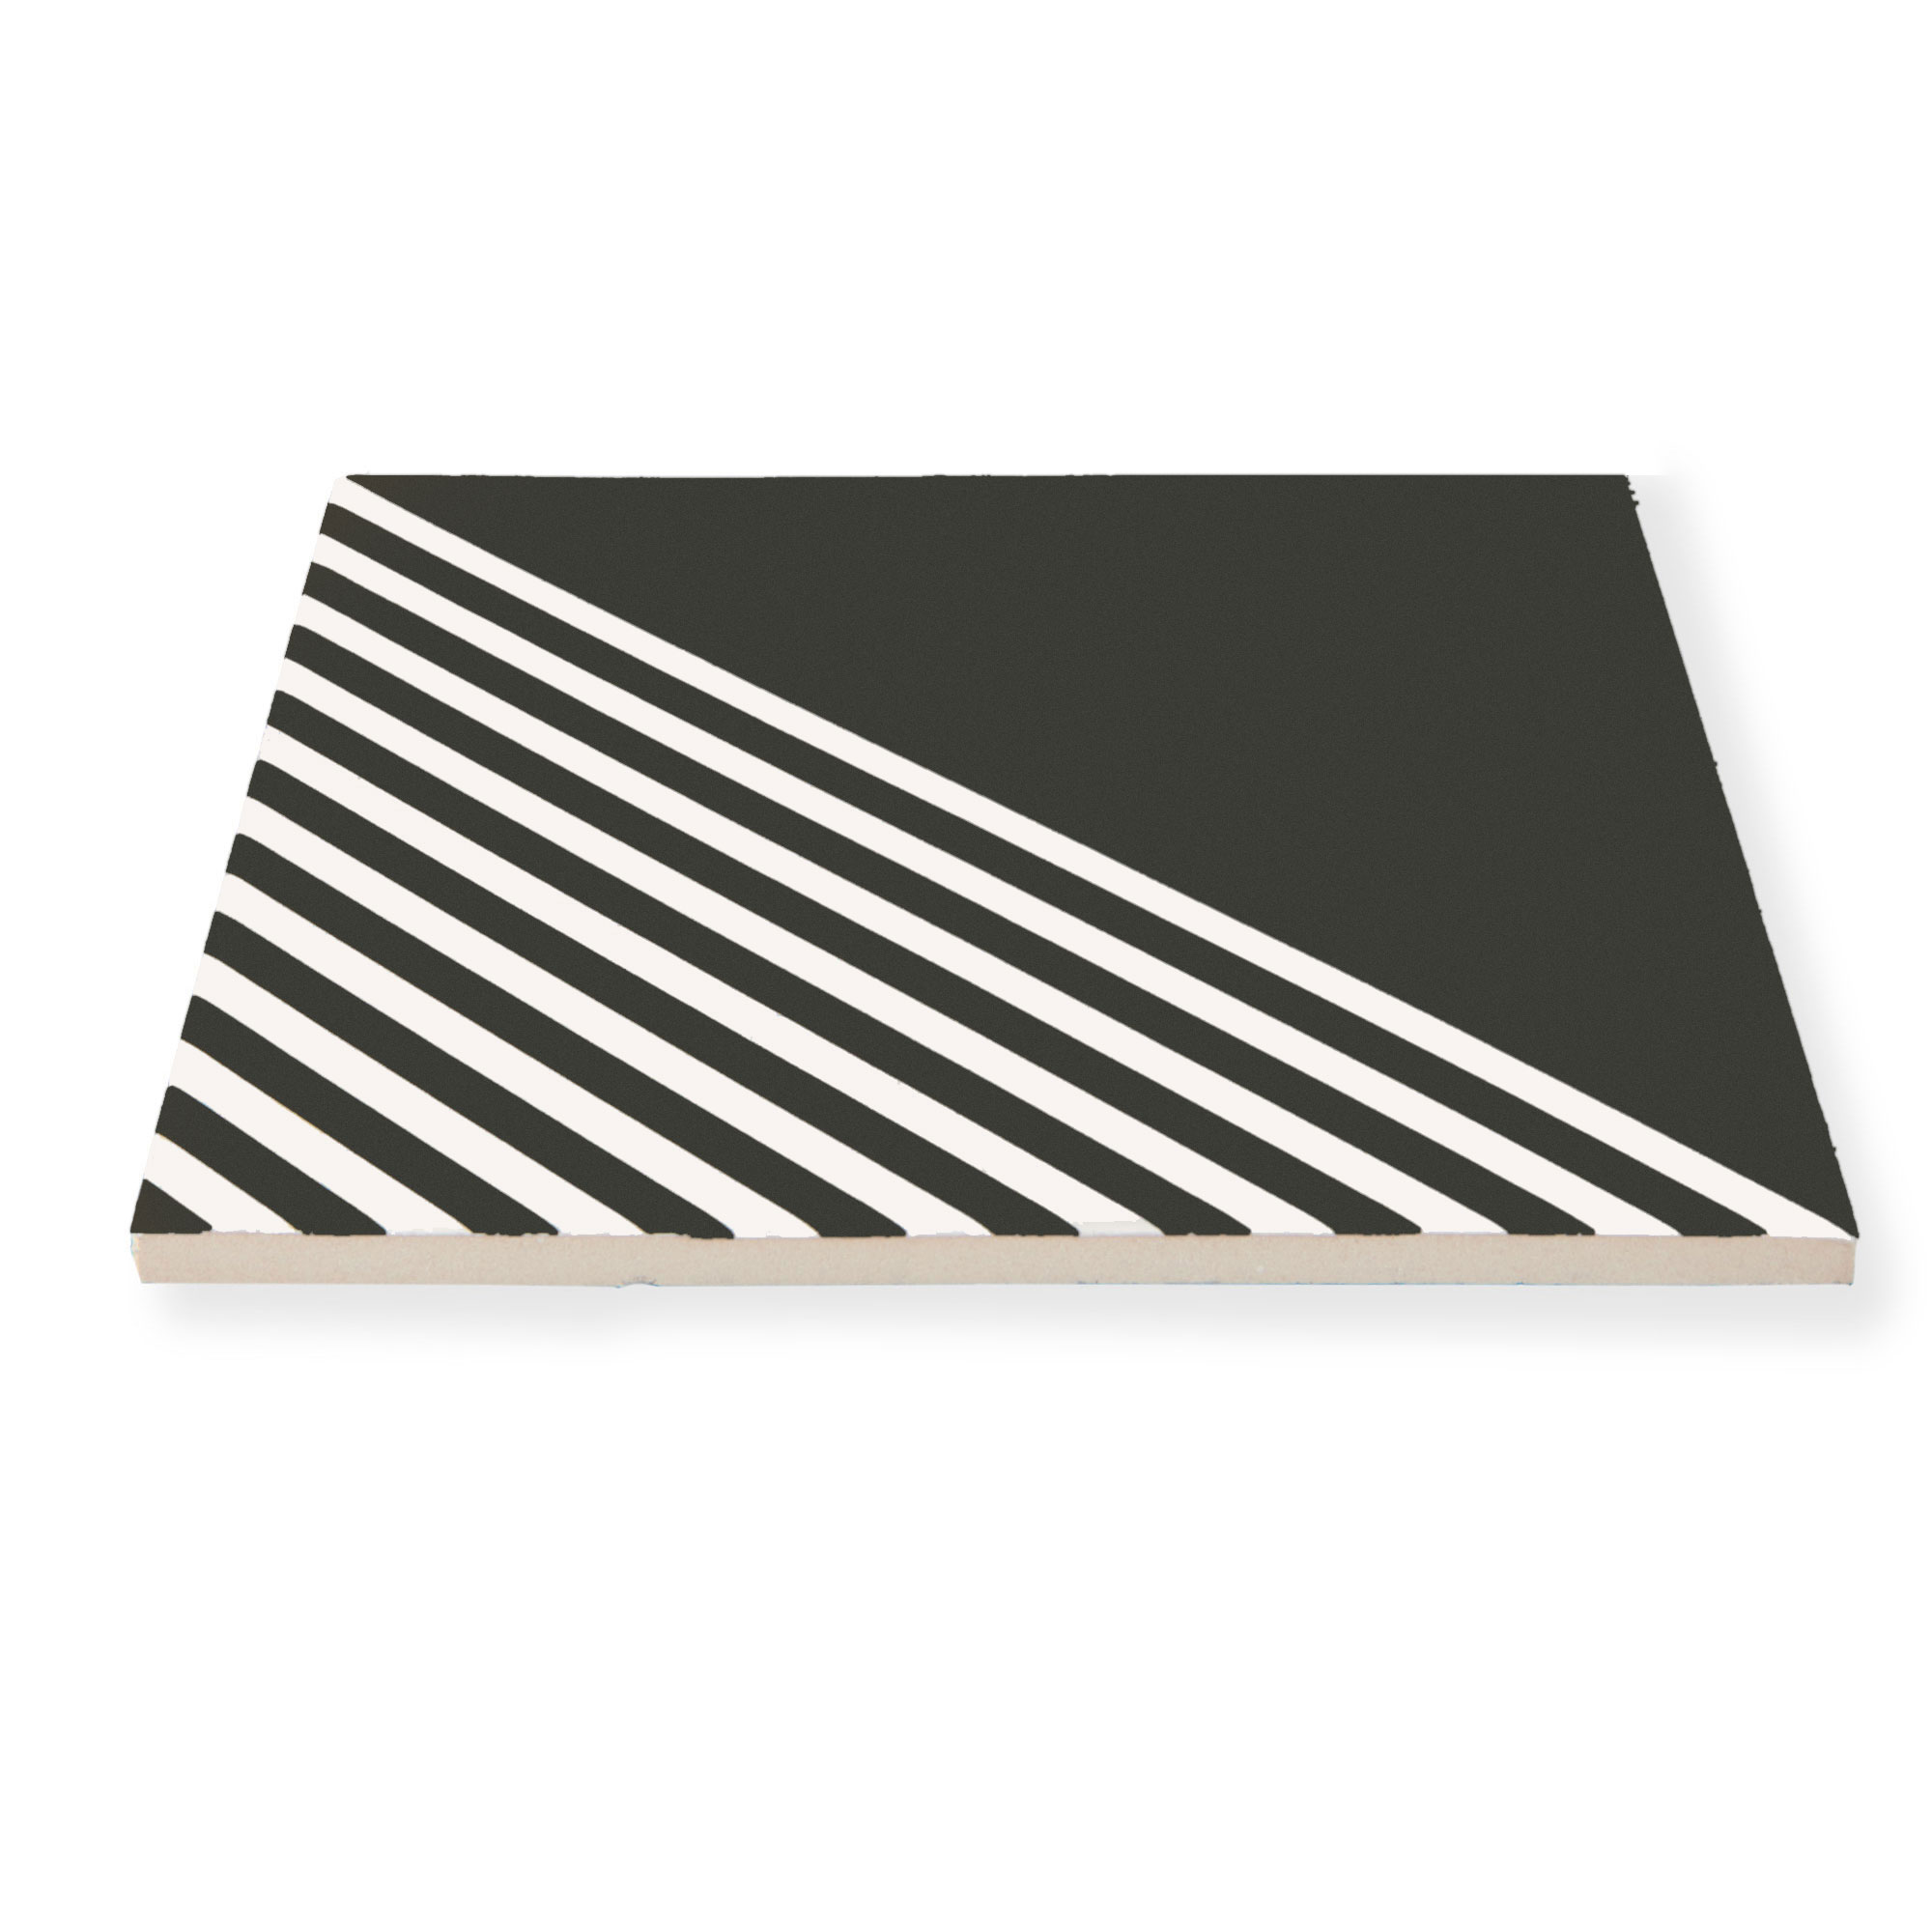 Nomad Black & White - Ceramic Tile